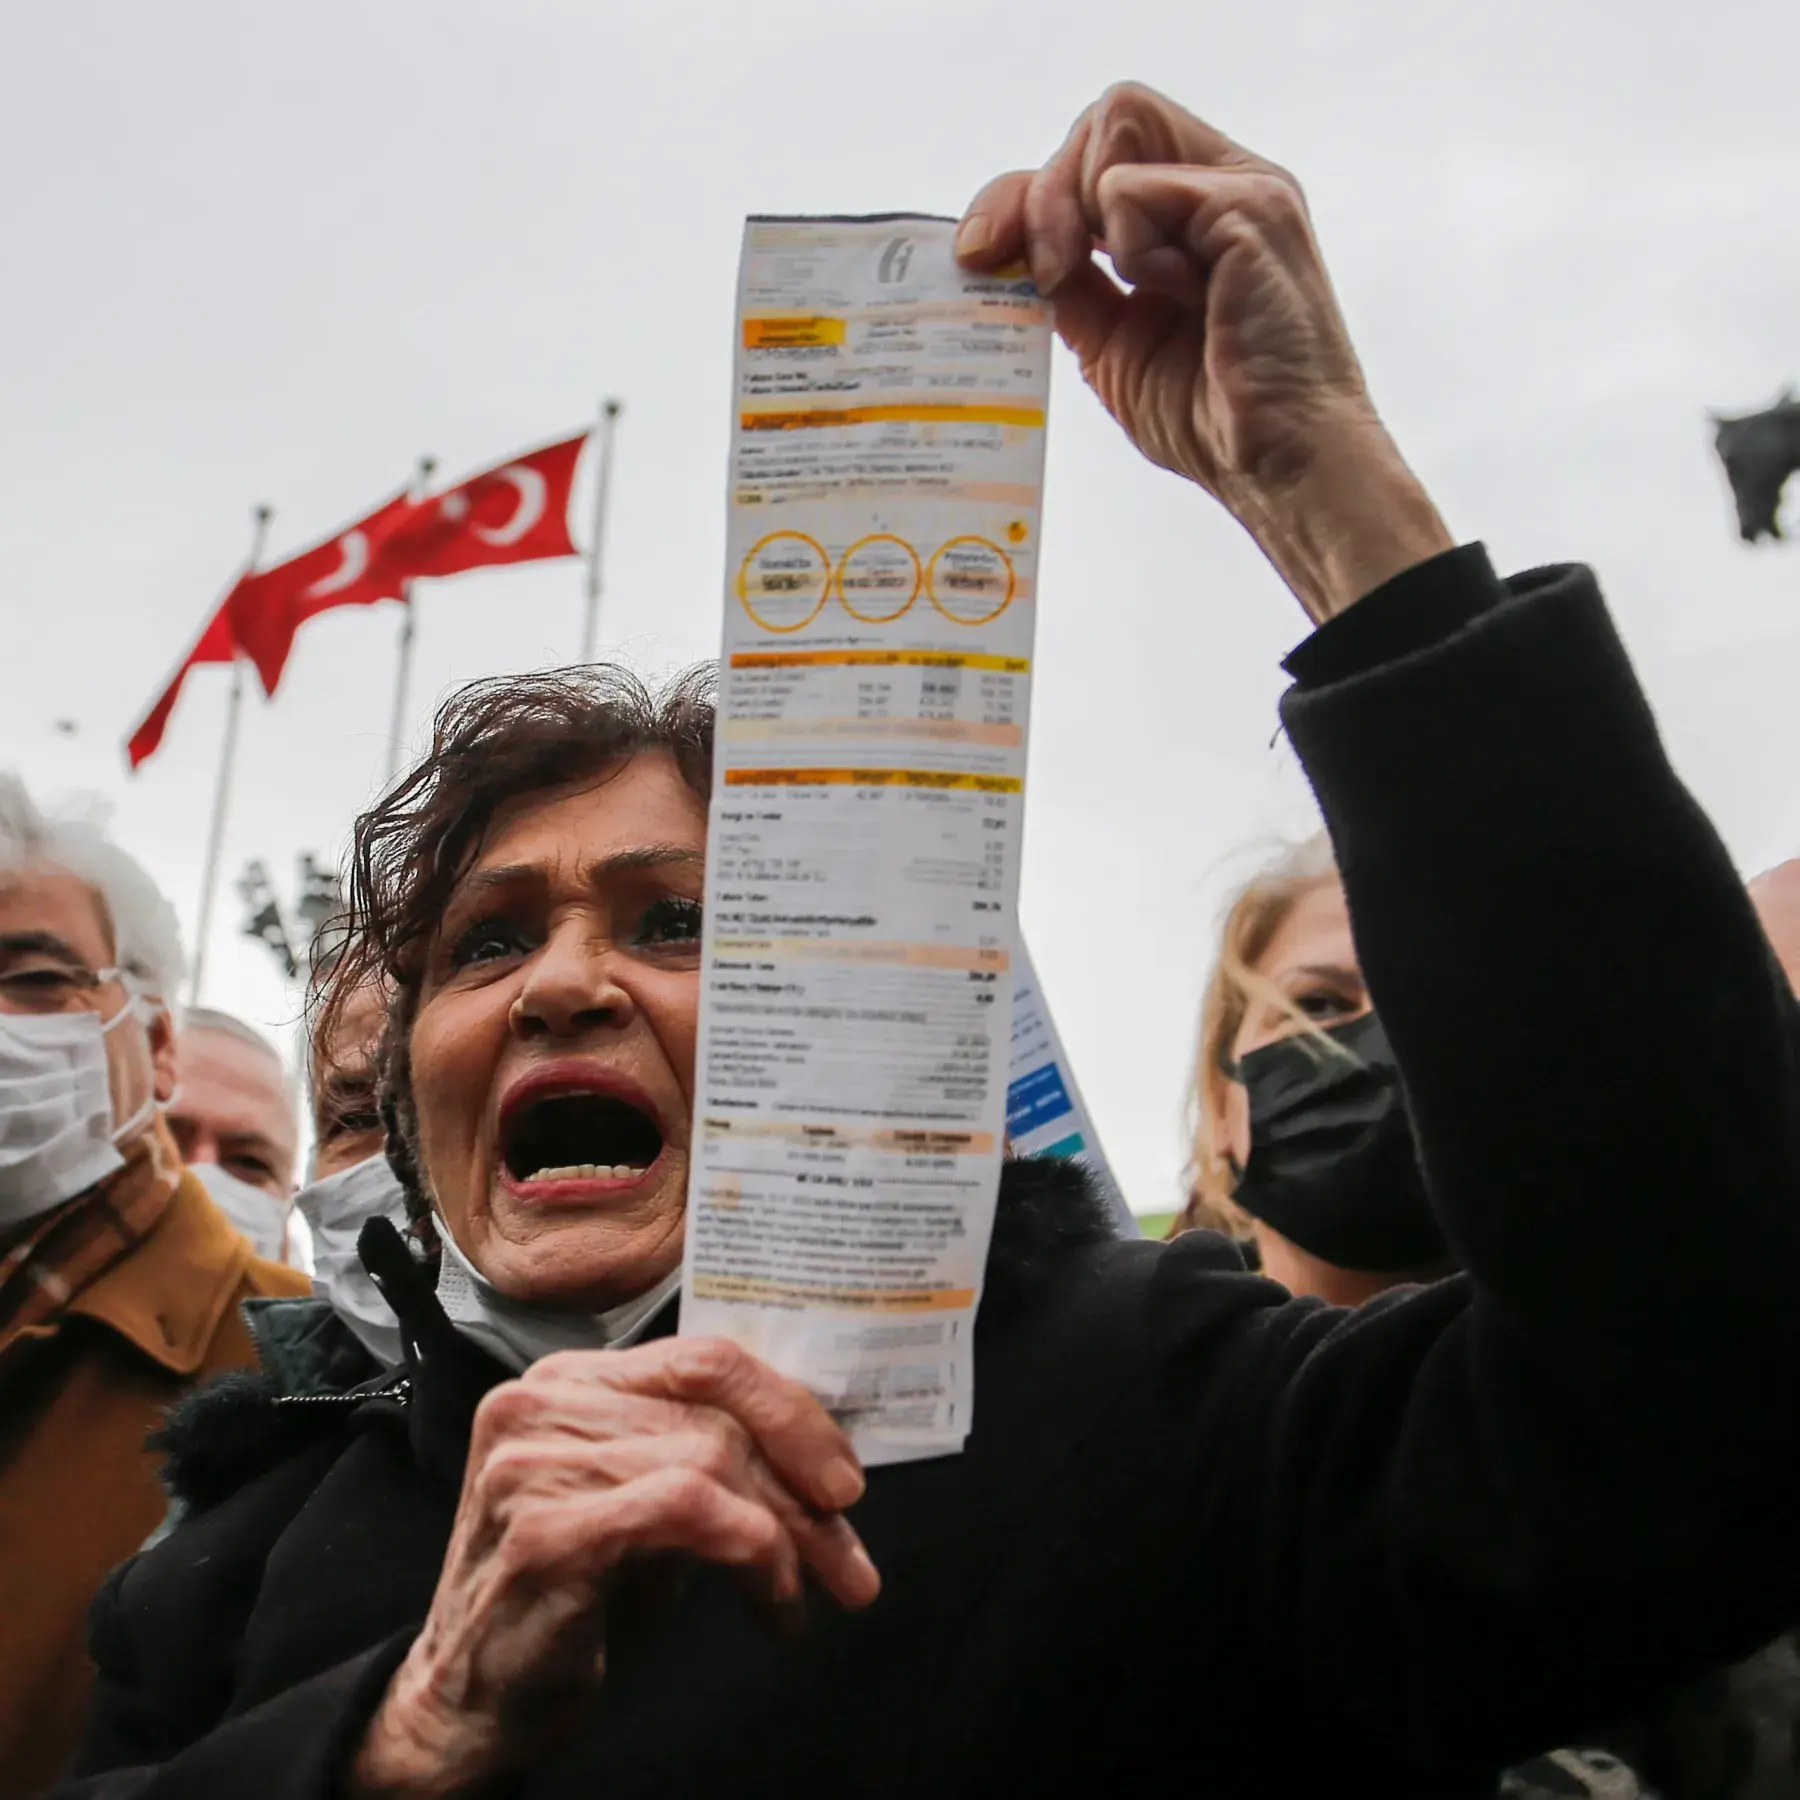 Türkiye's opposition media blasts finance minister over minimum wage comments